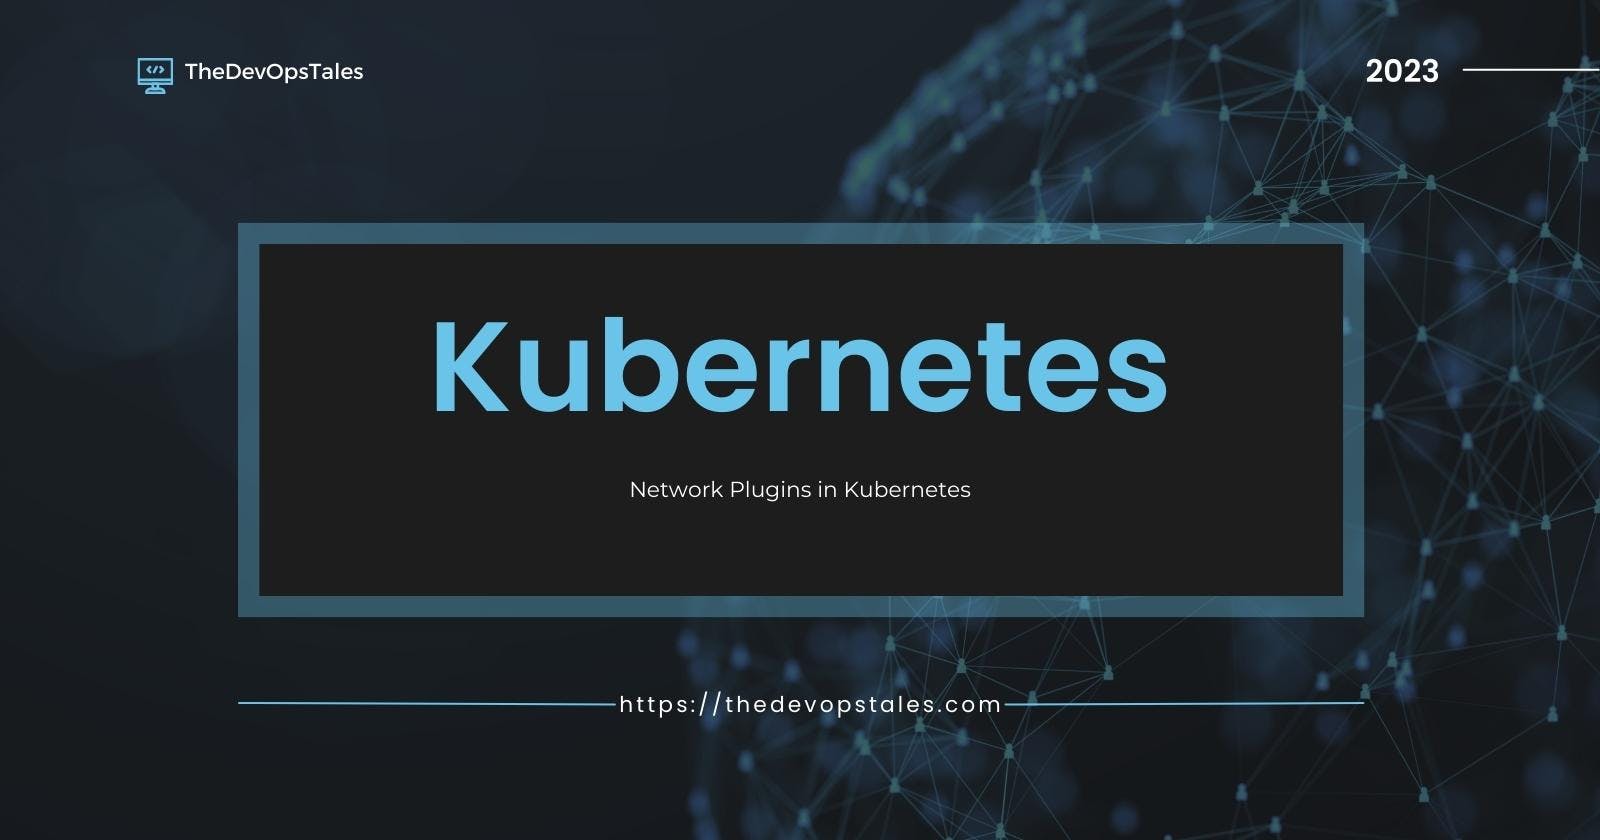 Network Plugins in Kubernetes